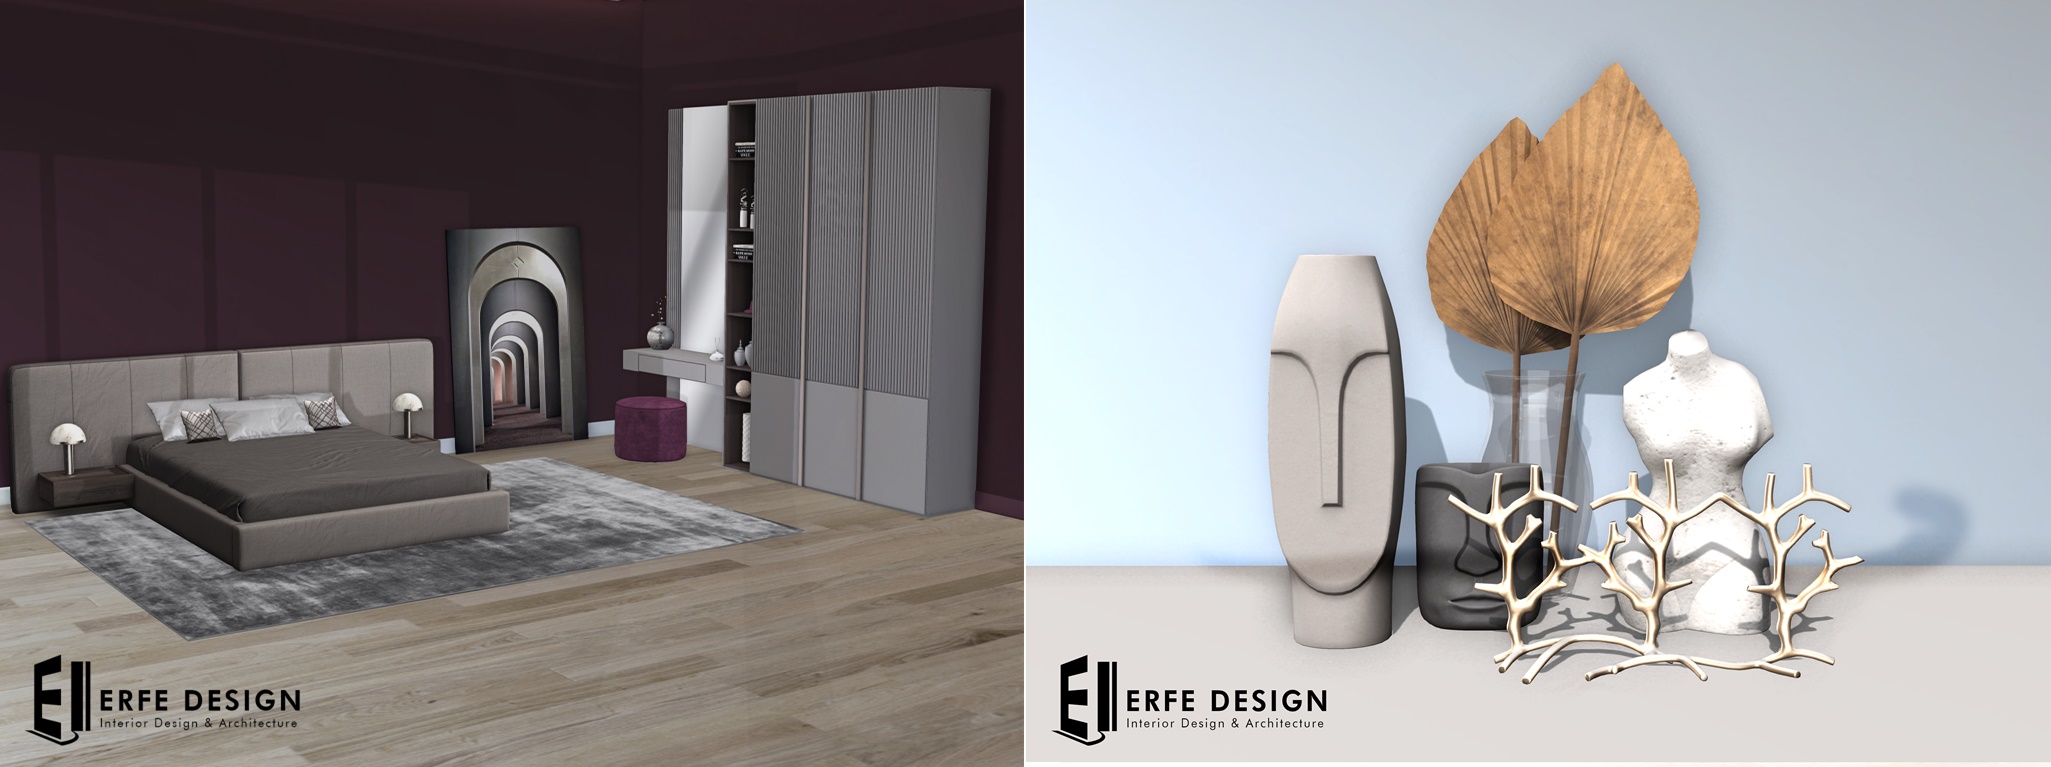 Erfe Design – Luna Bedroom & Gaya Decorative Set